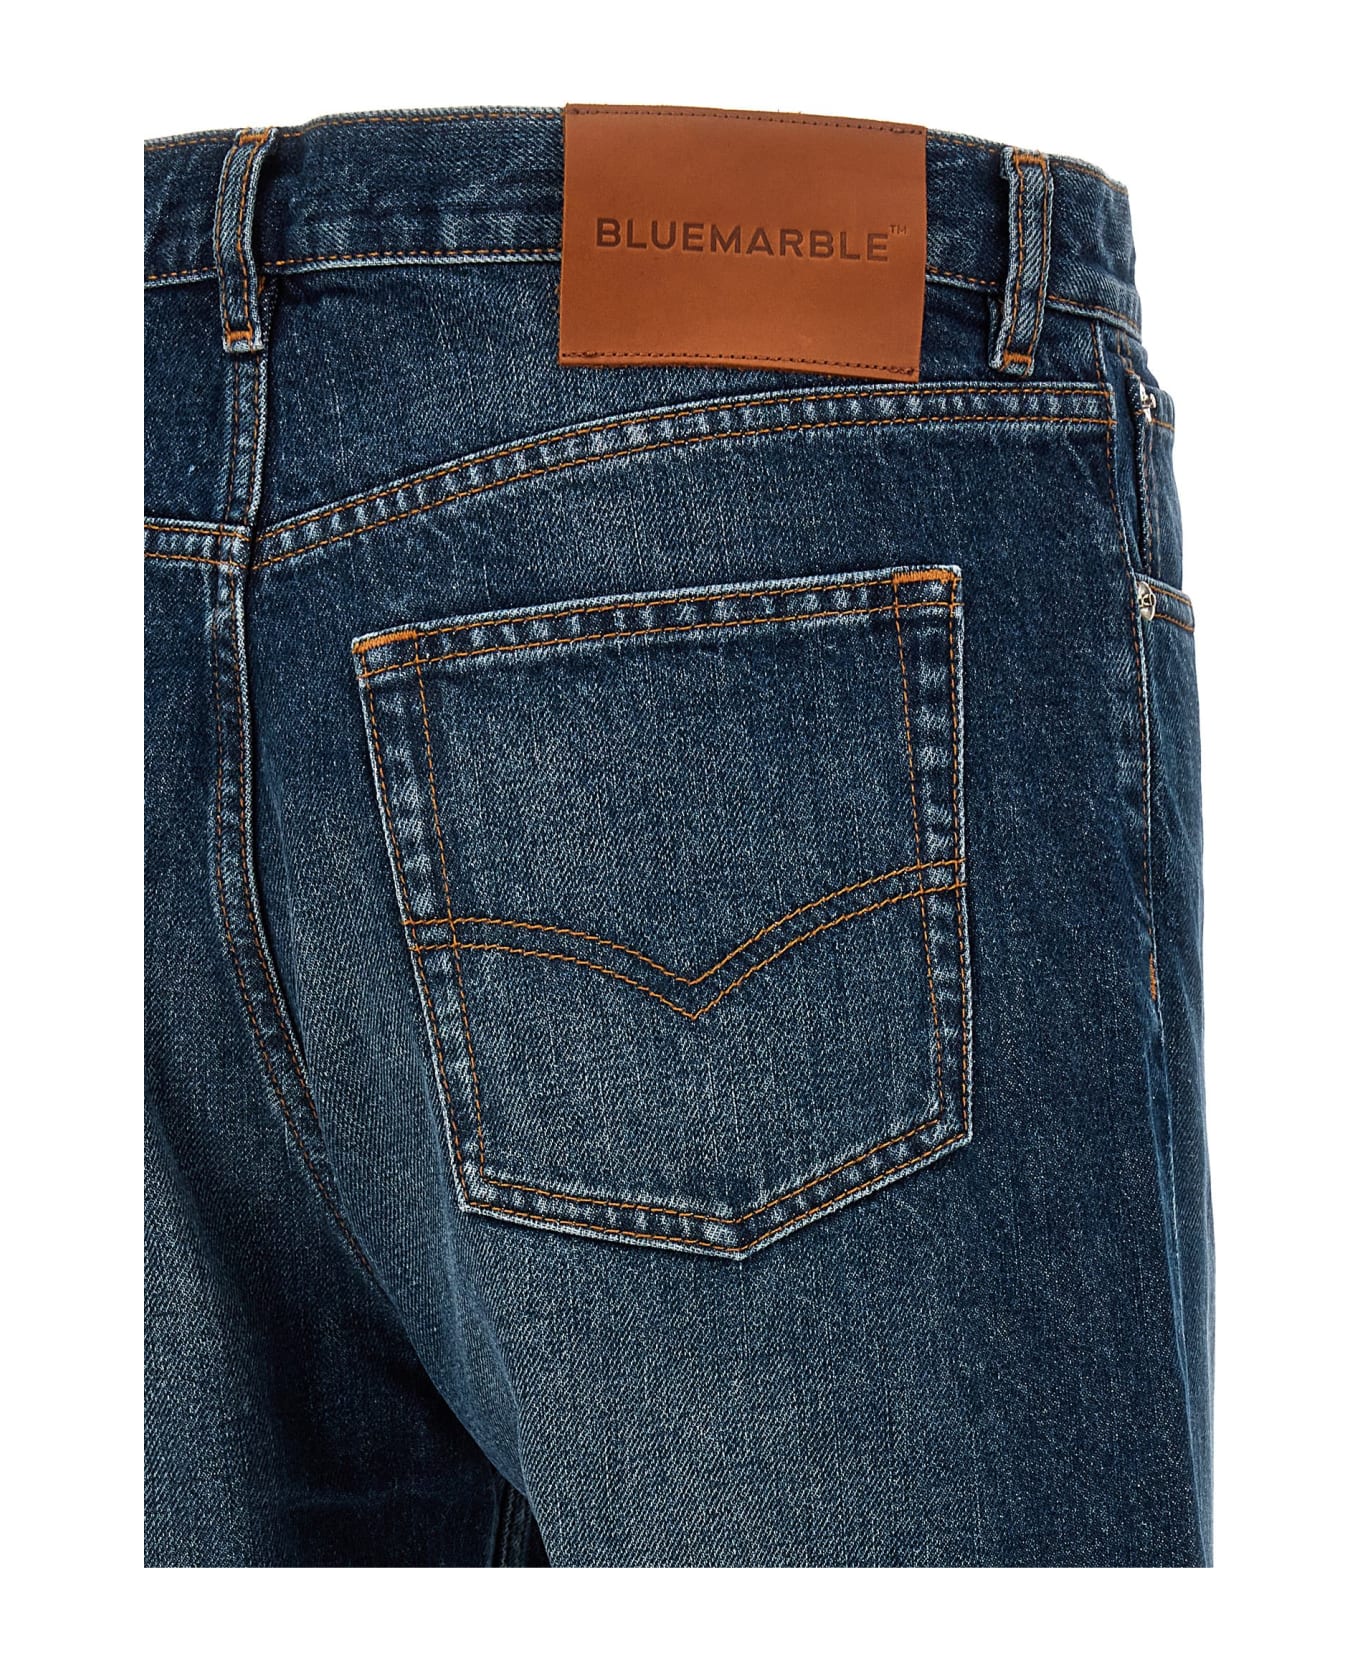 Bluemarble Multicolor Faux Fur Insert Jeans - Blue デニム